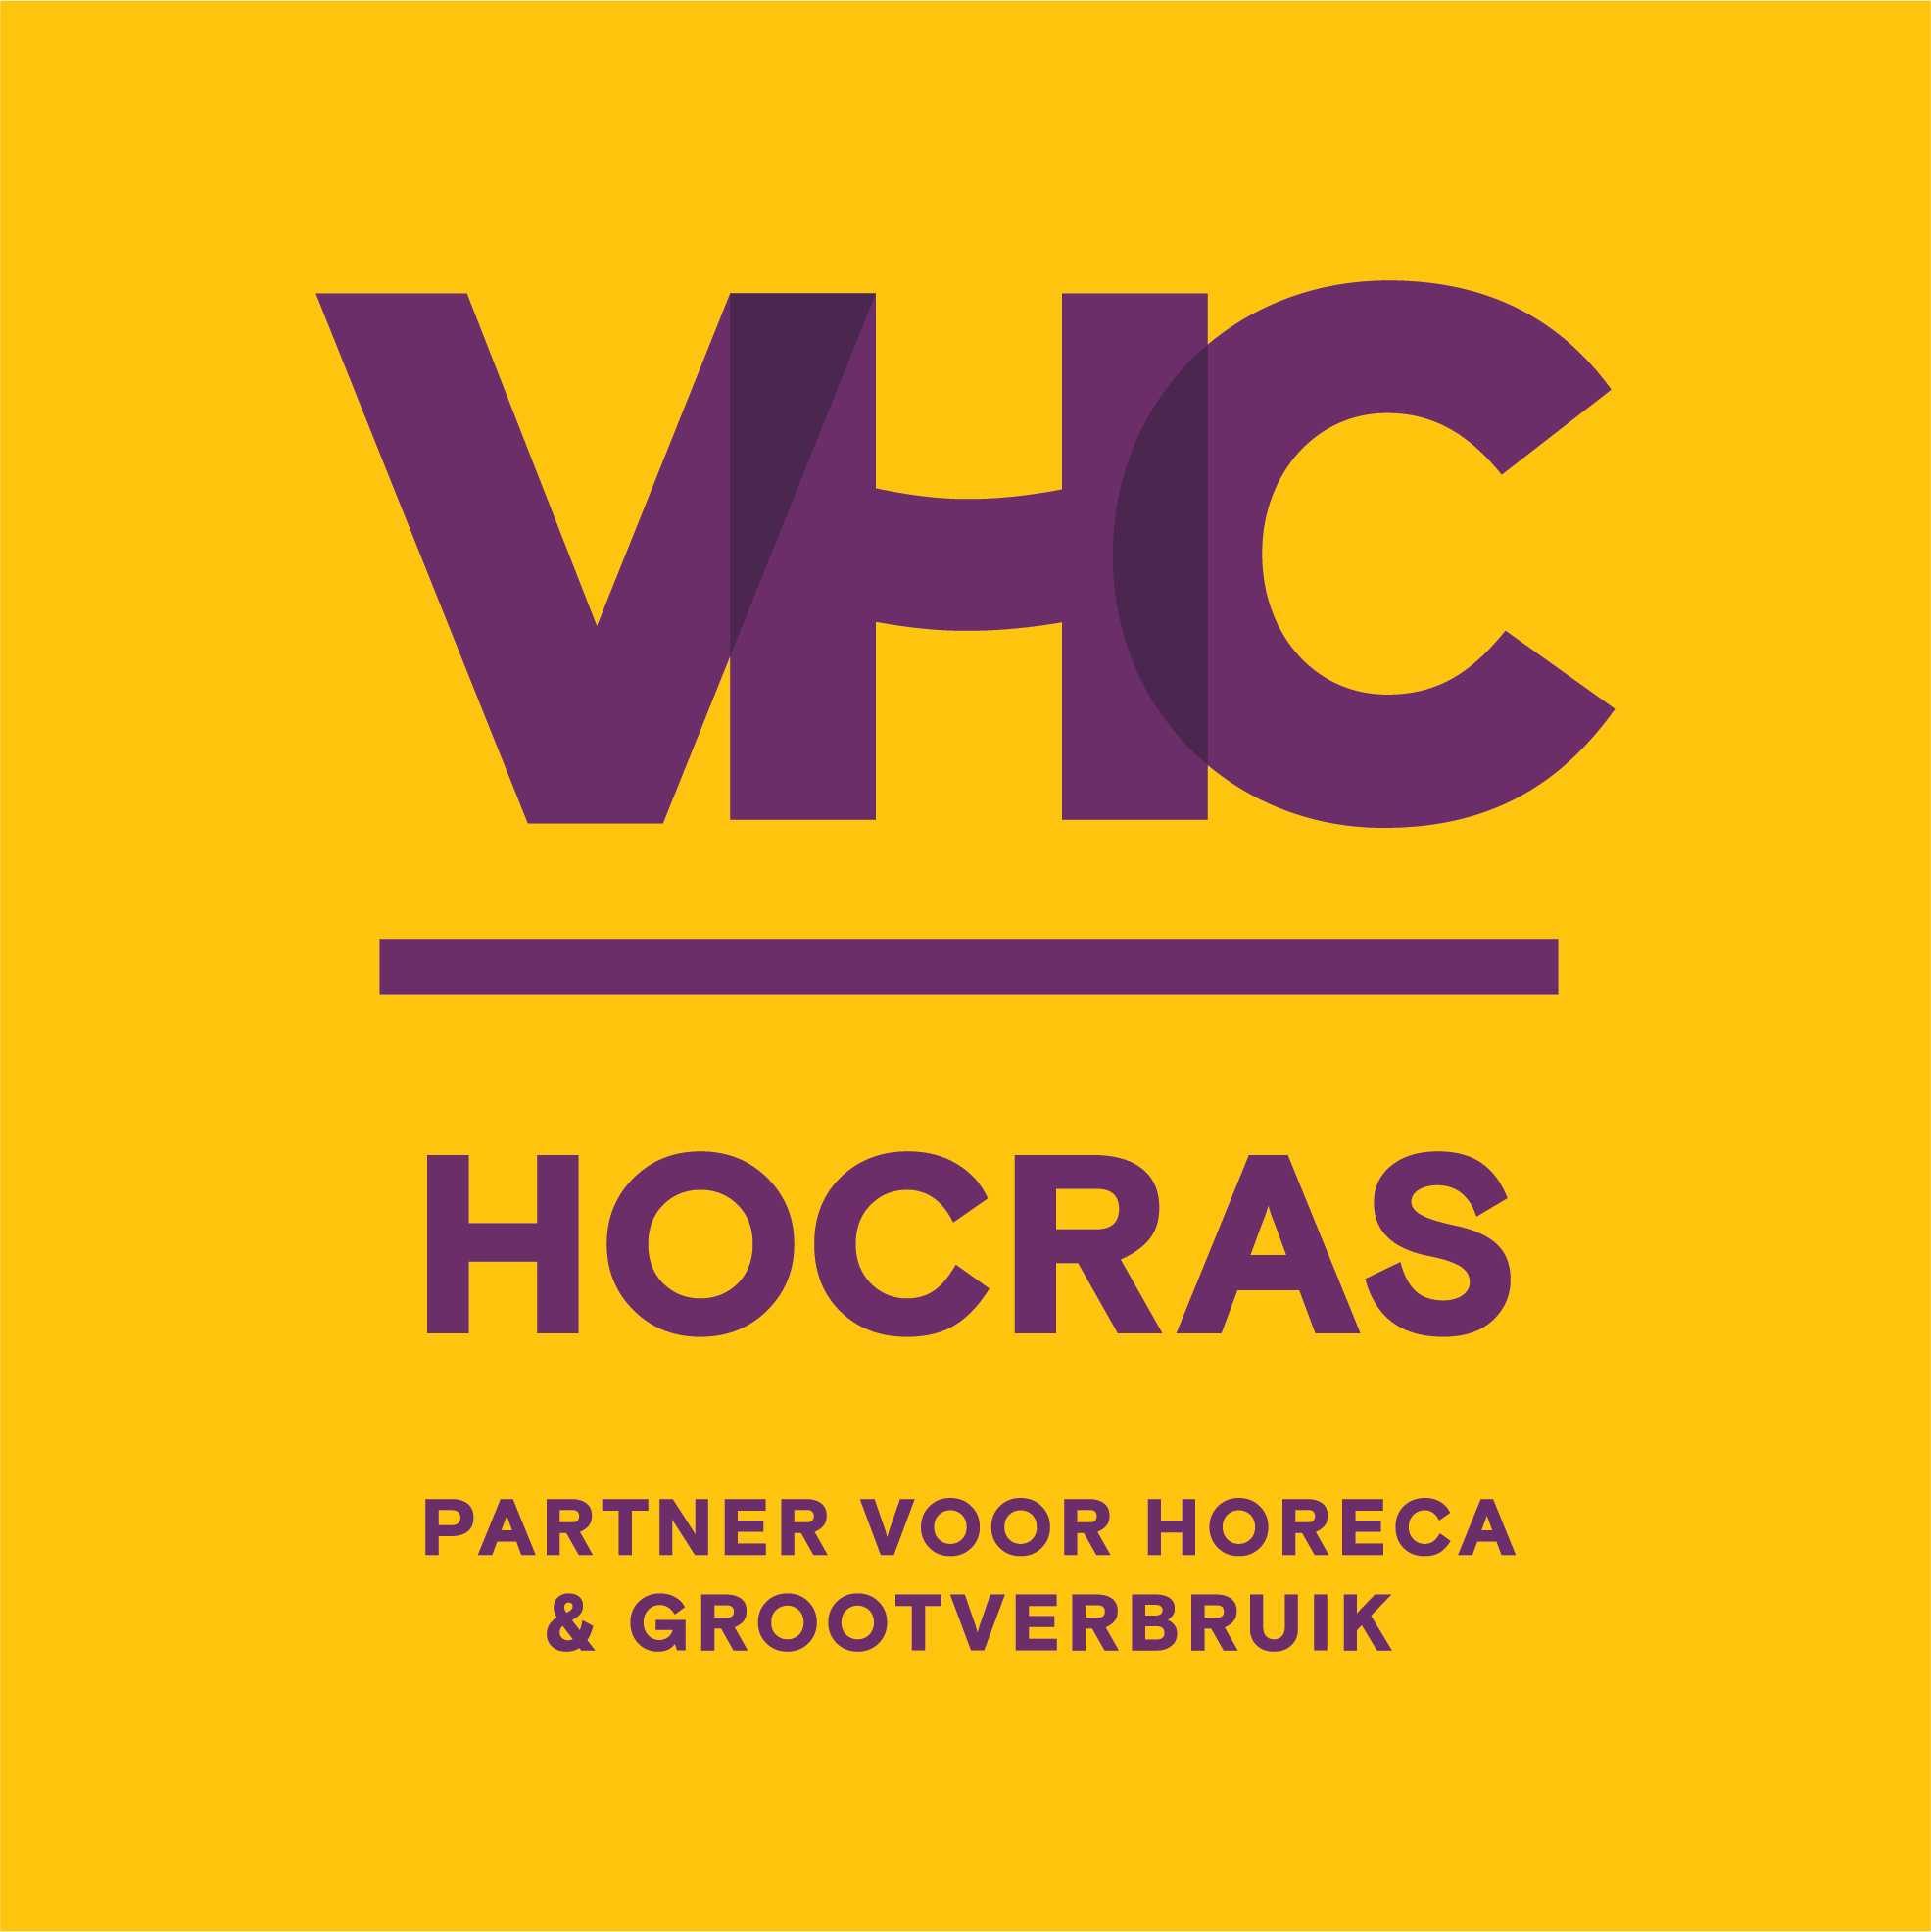 vhc hocras, euro-toques nederland